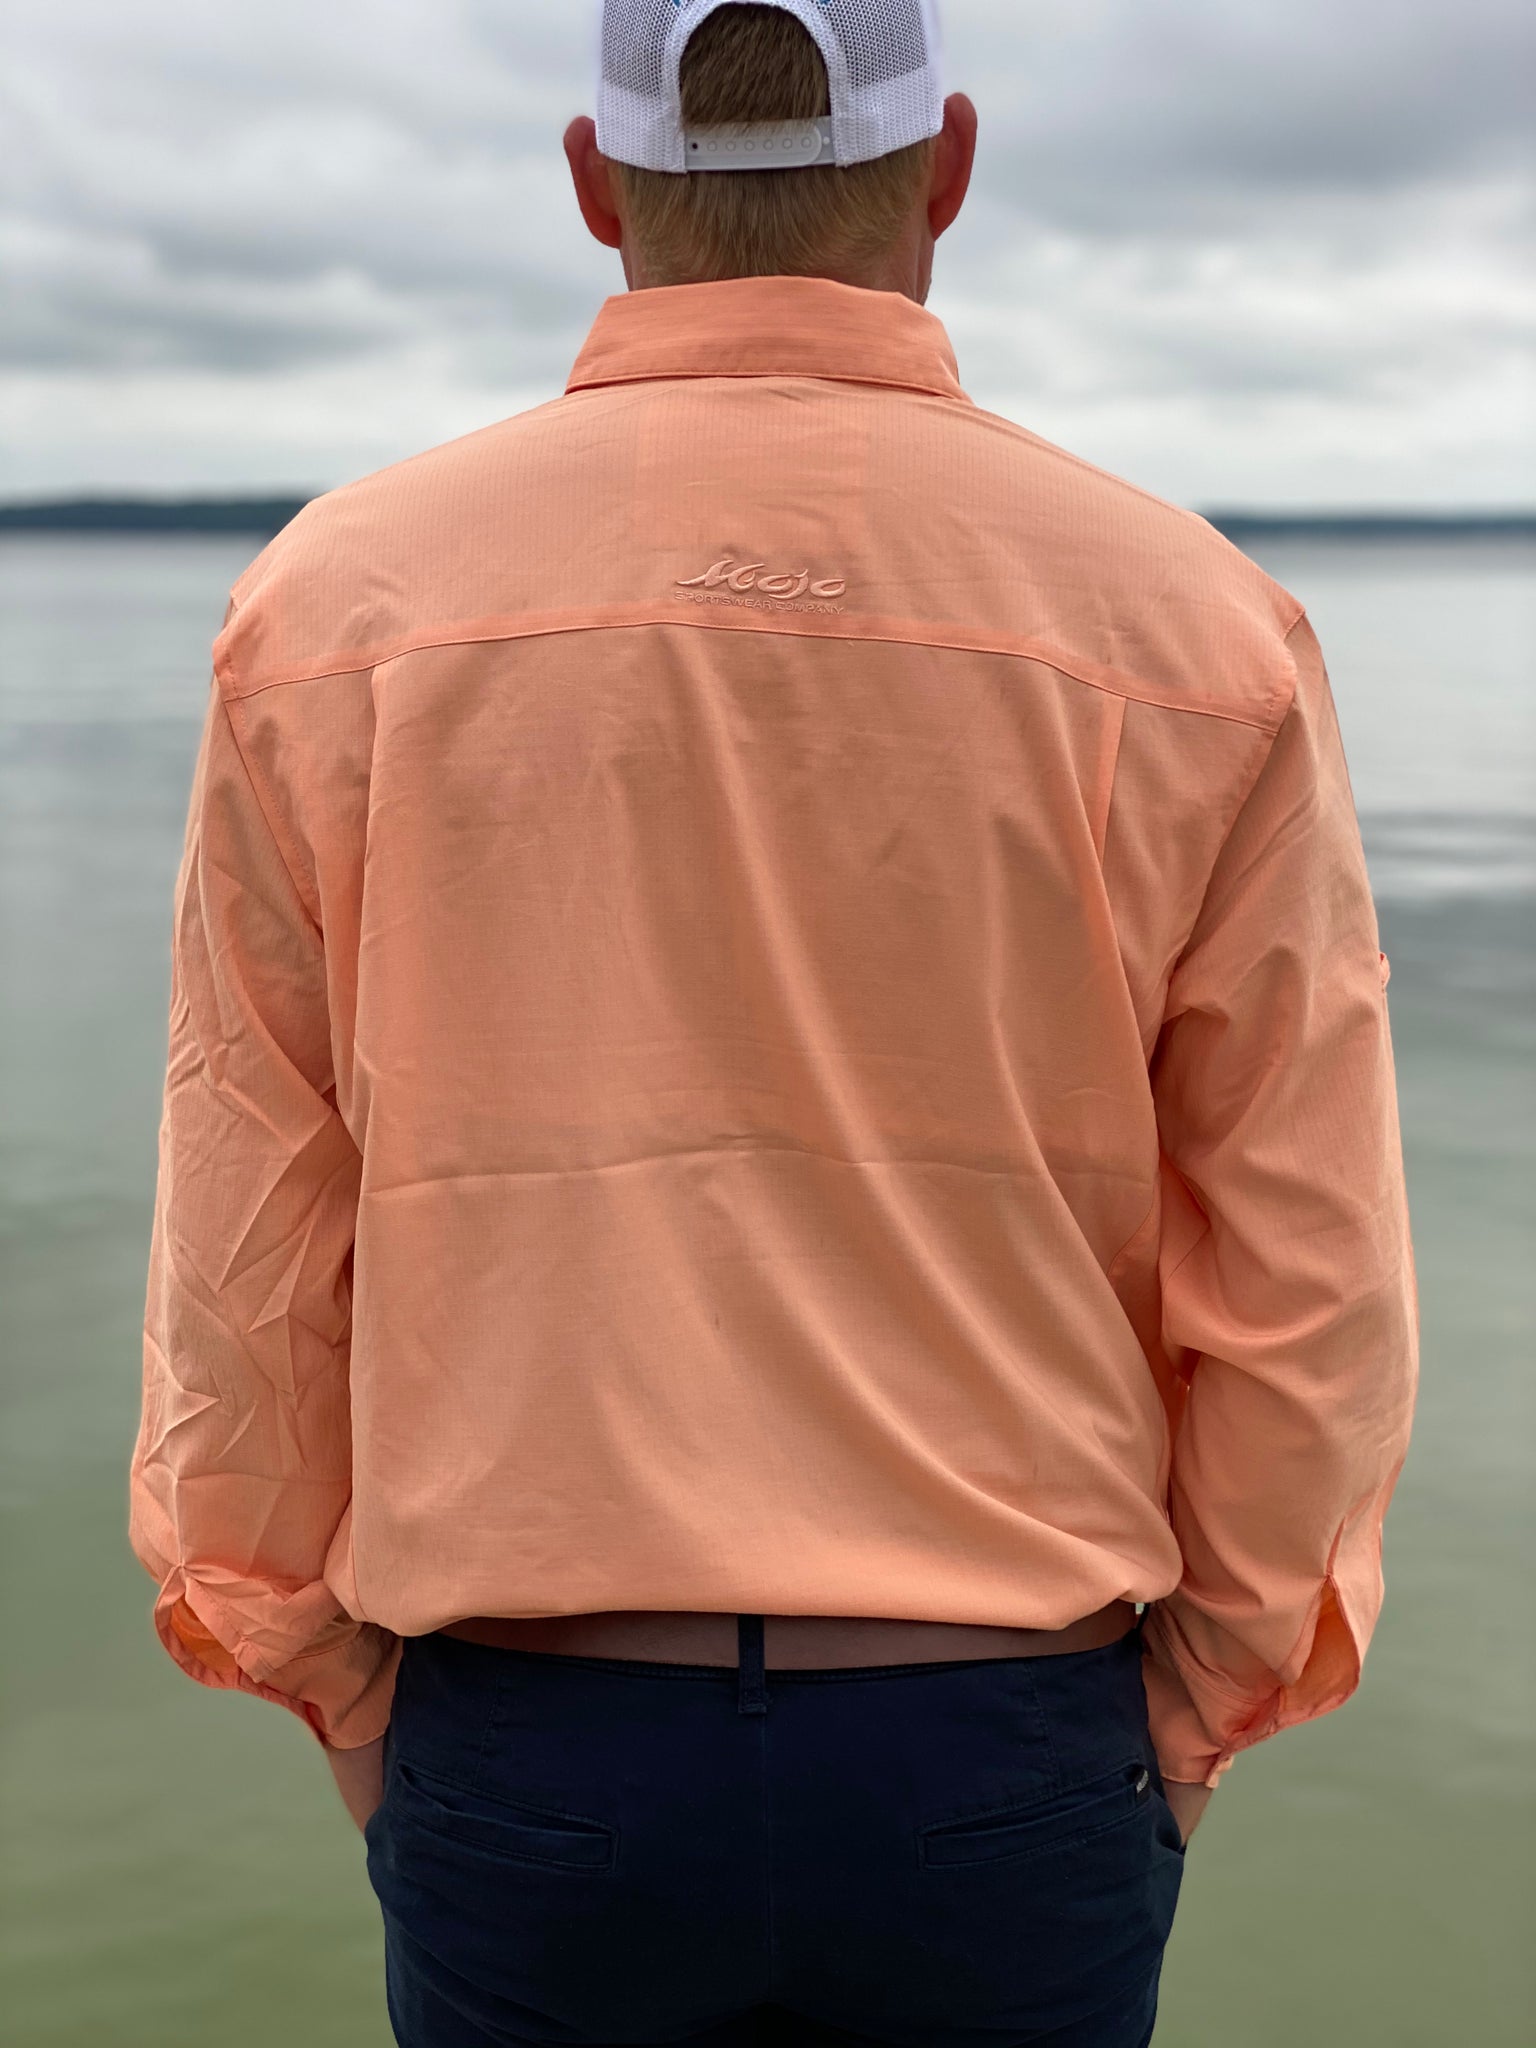 Mojo Mr. Big Long Sleeve Fishing Shirt – RETAIL AT Toon Shop